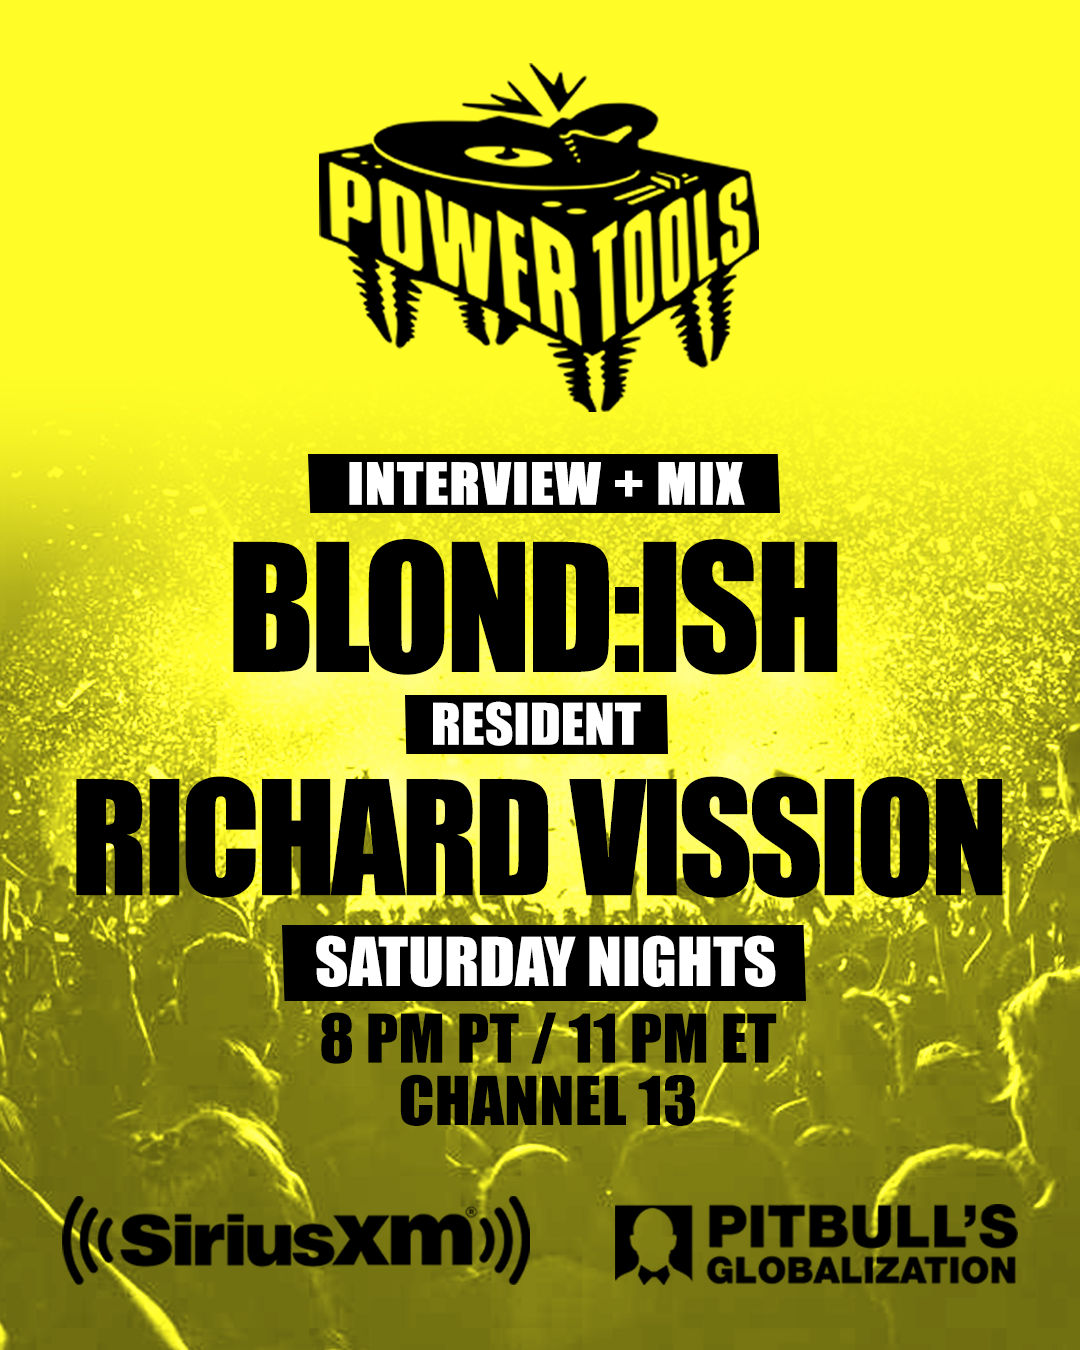 Episode 71: Powertools ft: Blond:ish and Richard Vission